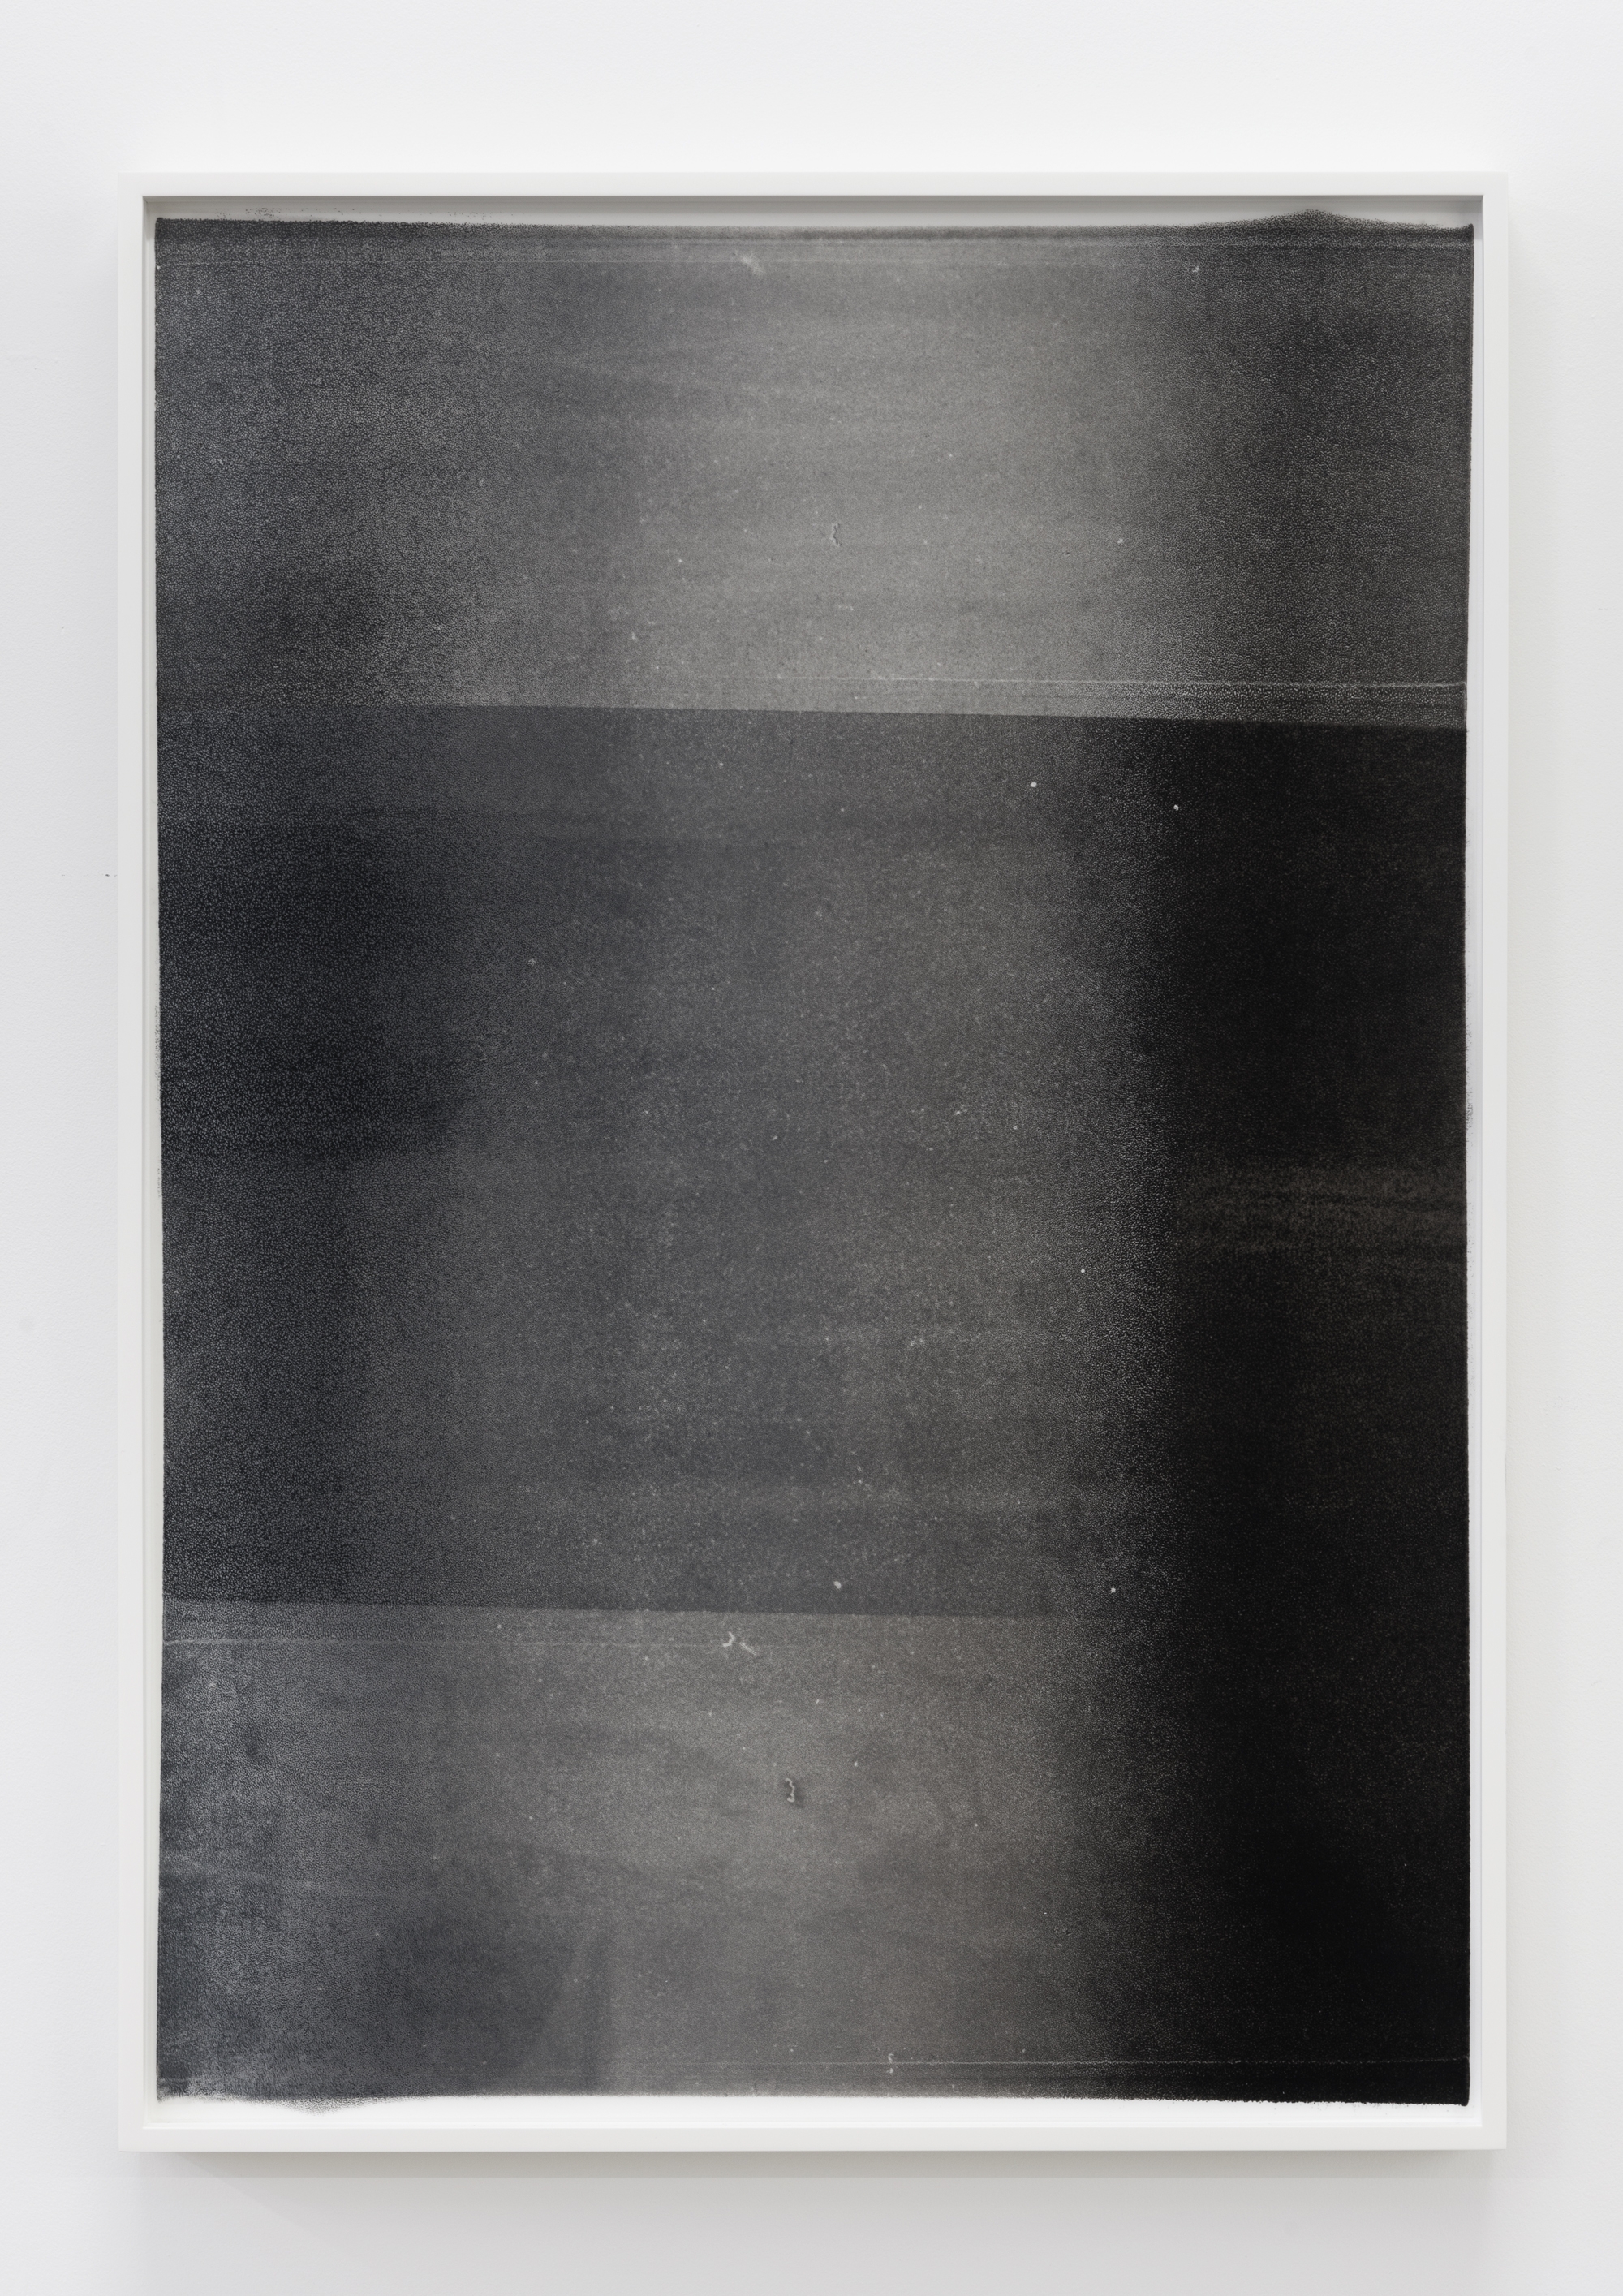   Untitled (dark glow) , Oil on Mylar, 2016, 31 x 22 inches 